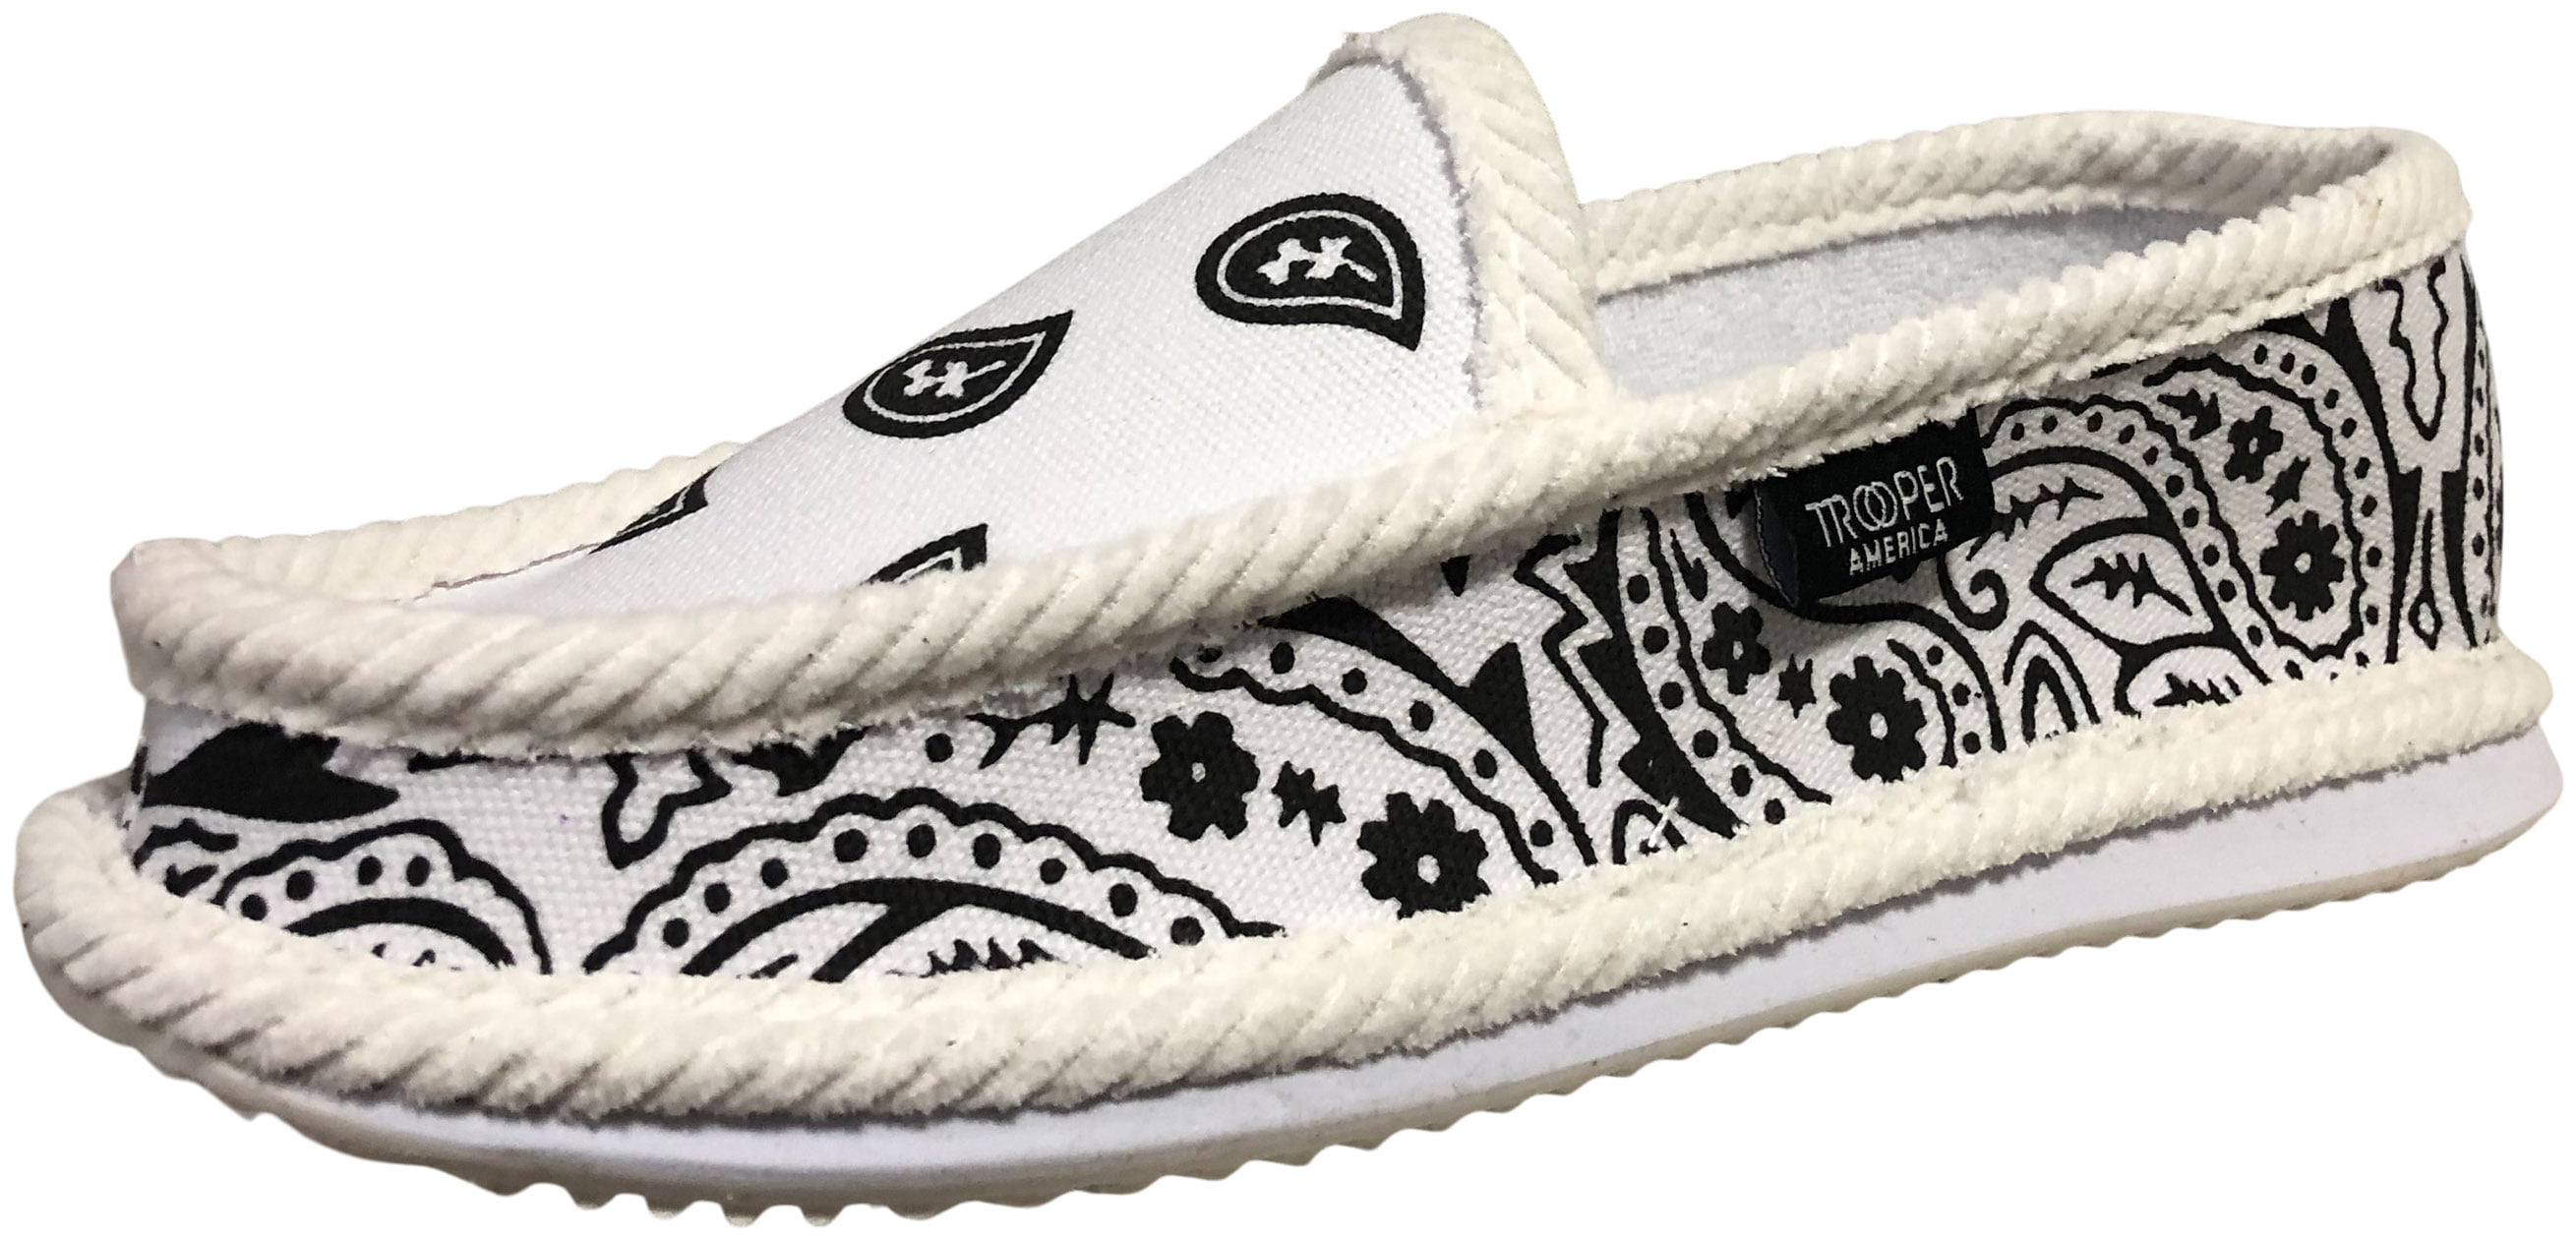 White Bandana House Shoes Slippers Trooper Brand New Size 8 9 10 11 12 13 